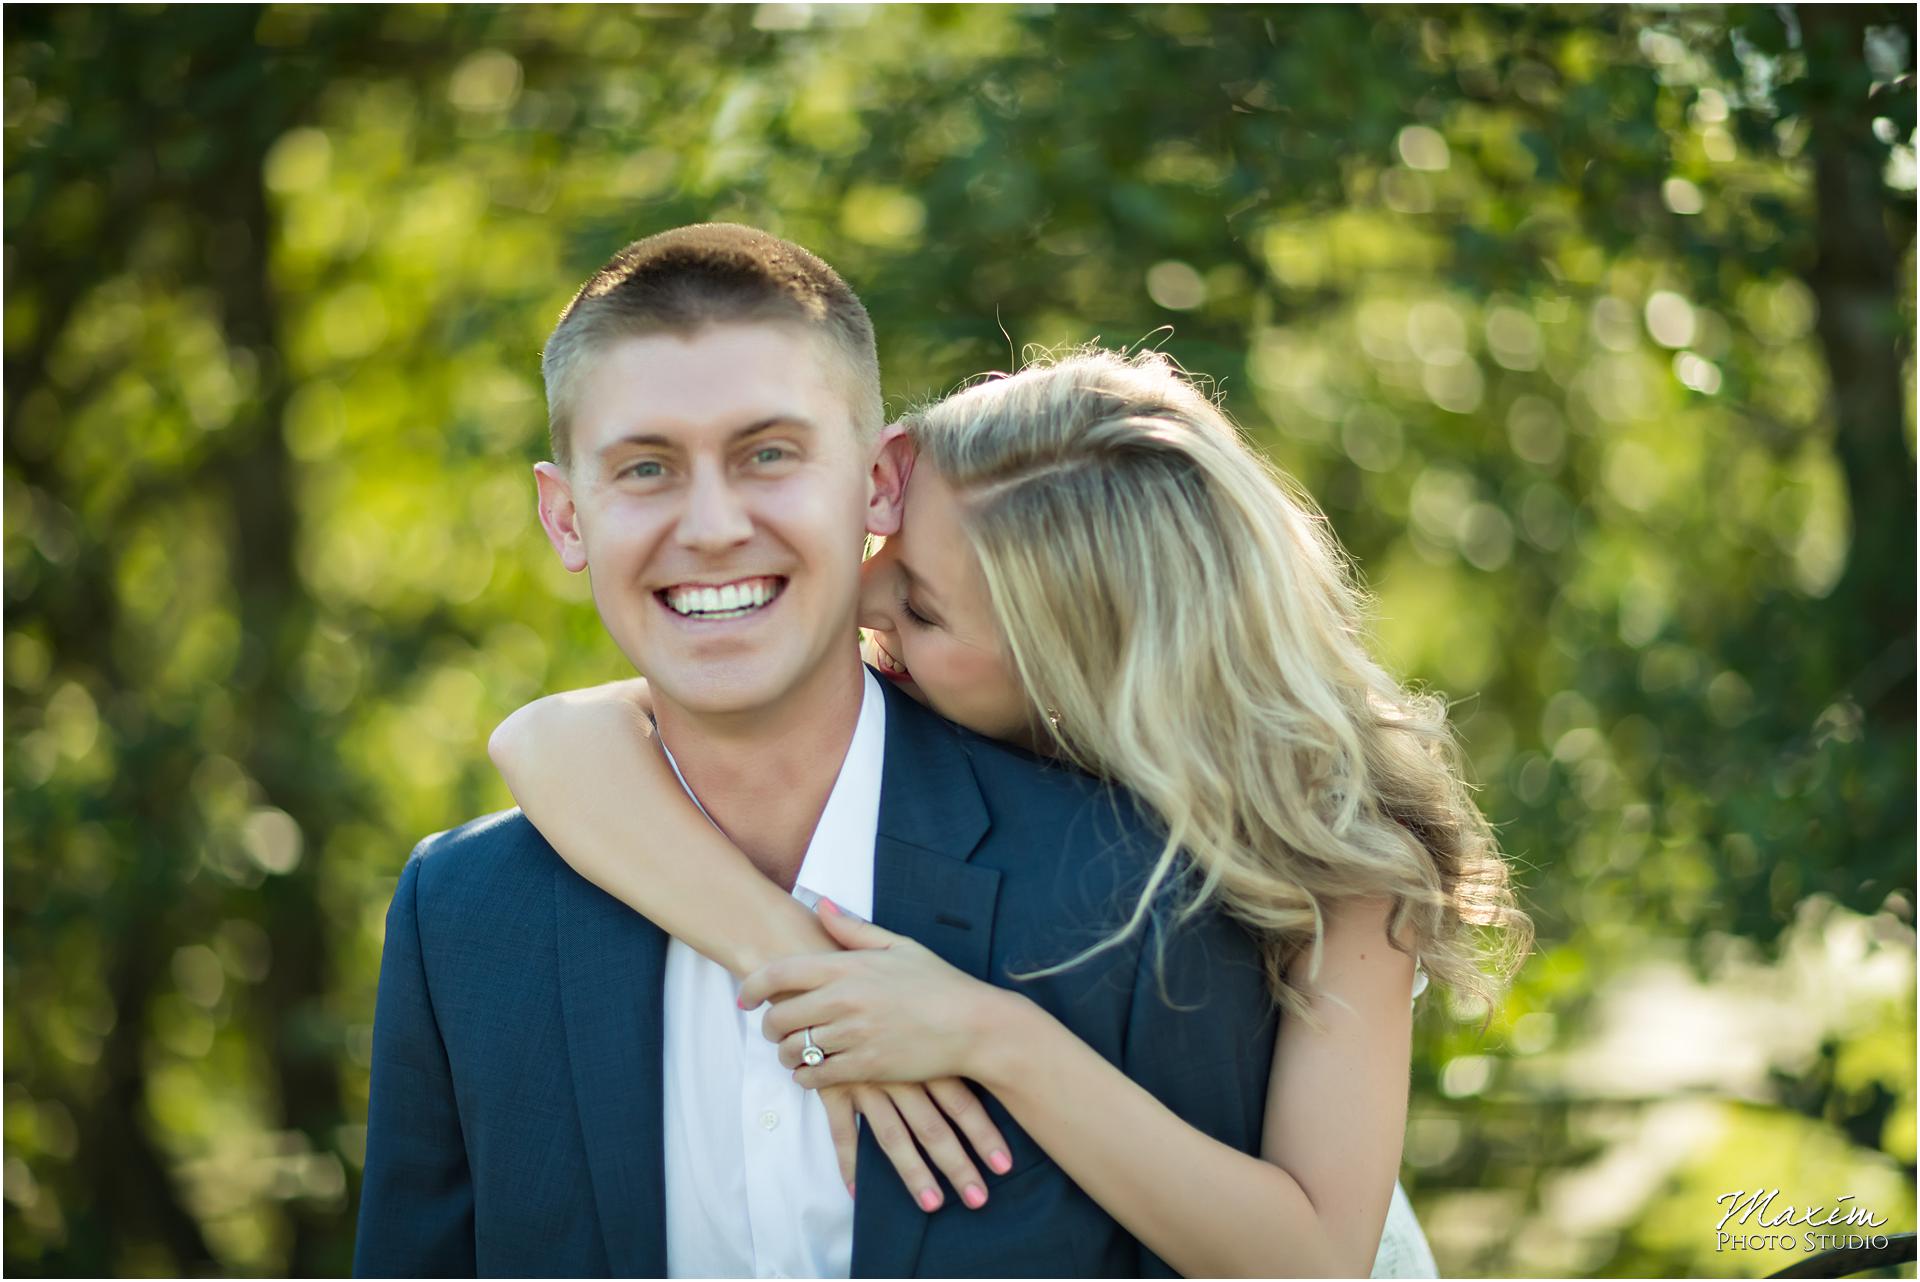 Ault Park Cincinnati, Engagement Photography, laughing couple